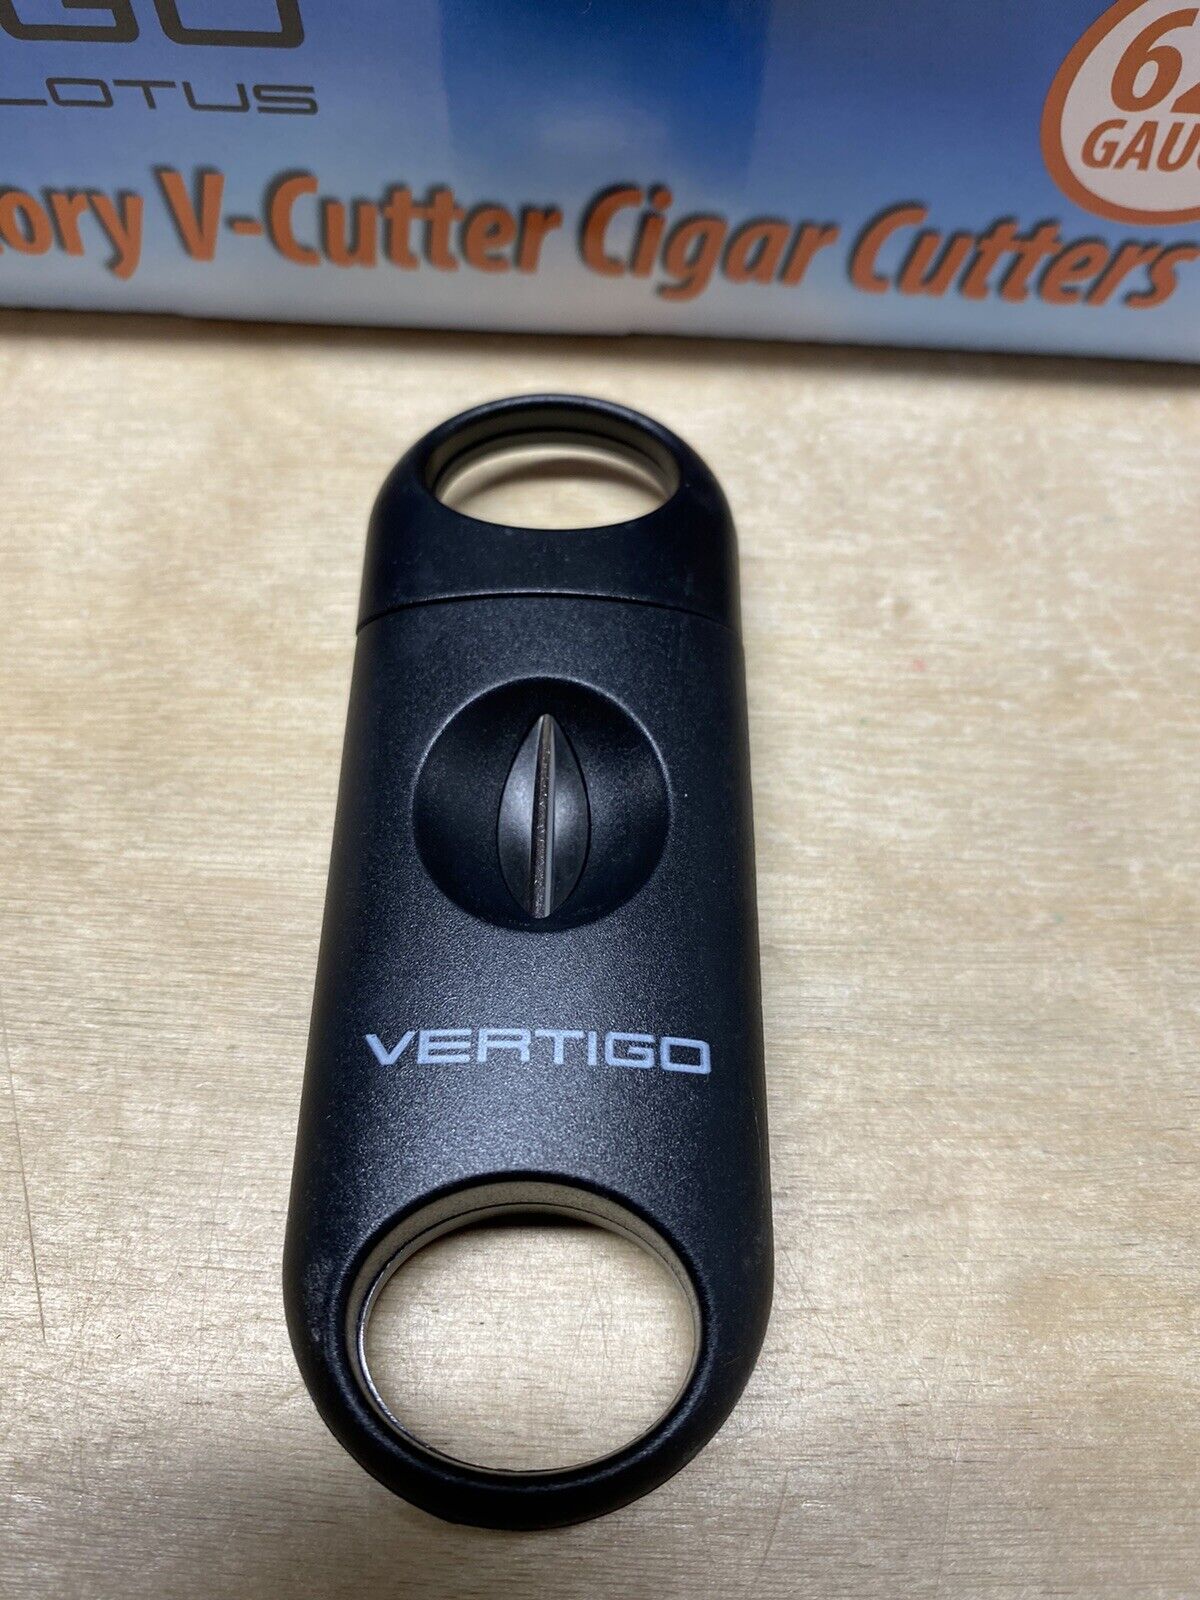 Vertigo by Lotus Victory V-Cut Cigar Cutter - New